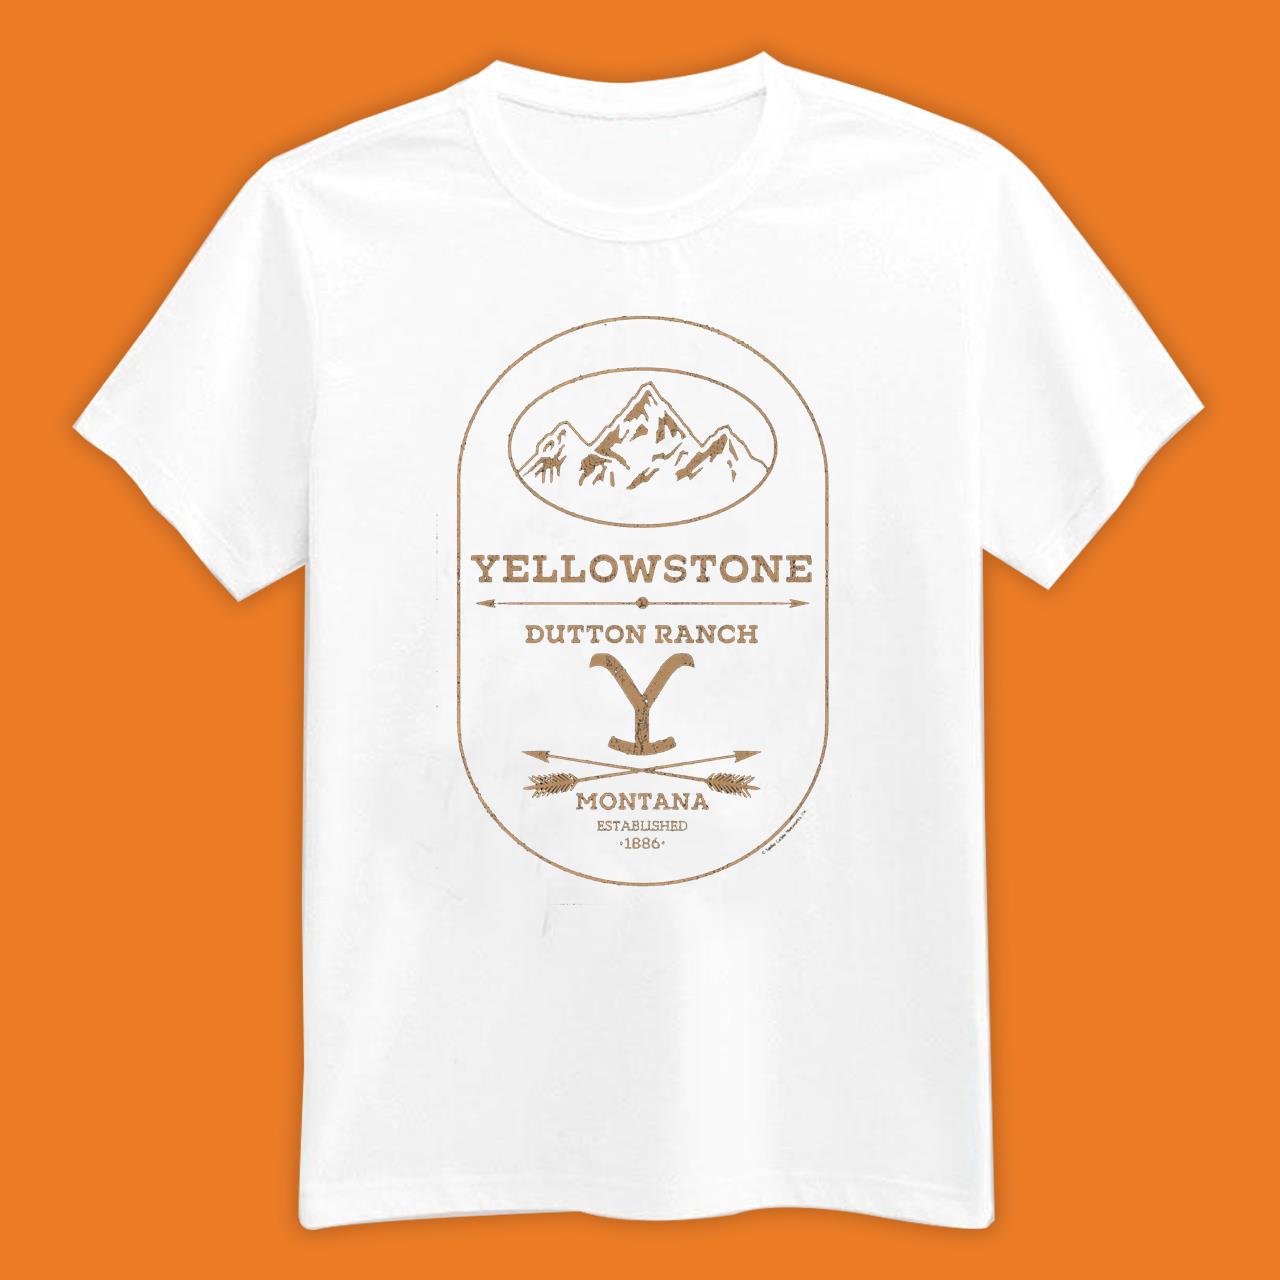 Yellowstone Dutton Ranch Graphic T-shirt